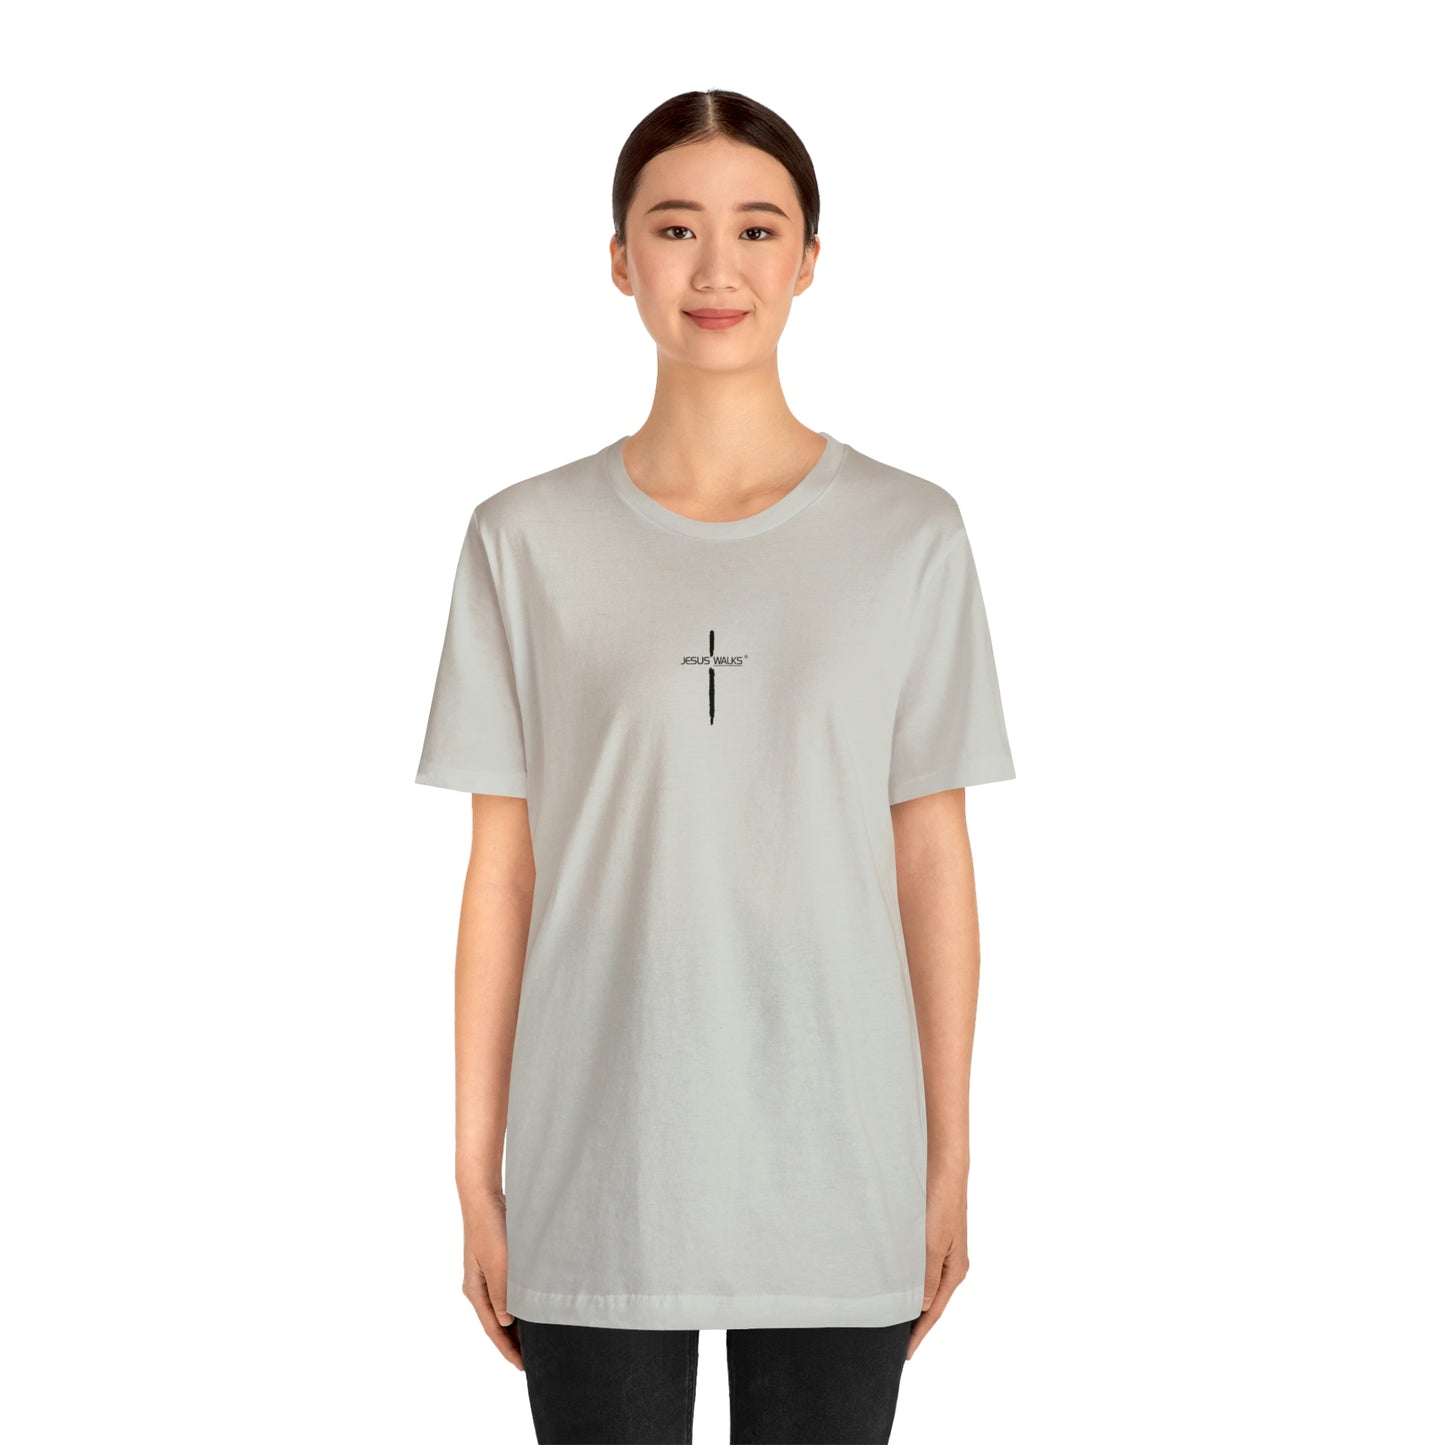 Jesus Walks Center Cross Short Sleeve Tee